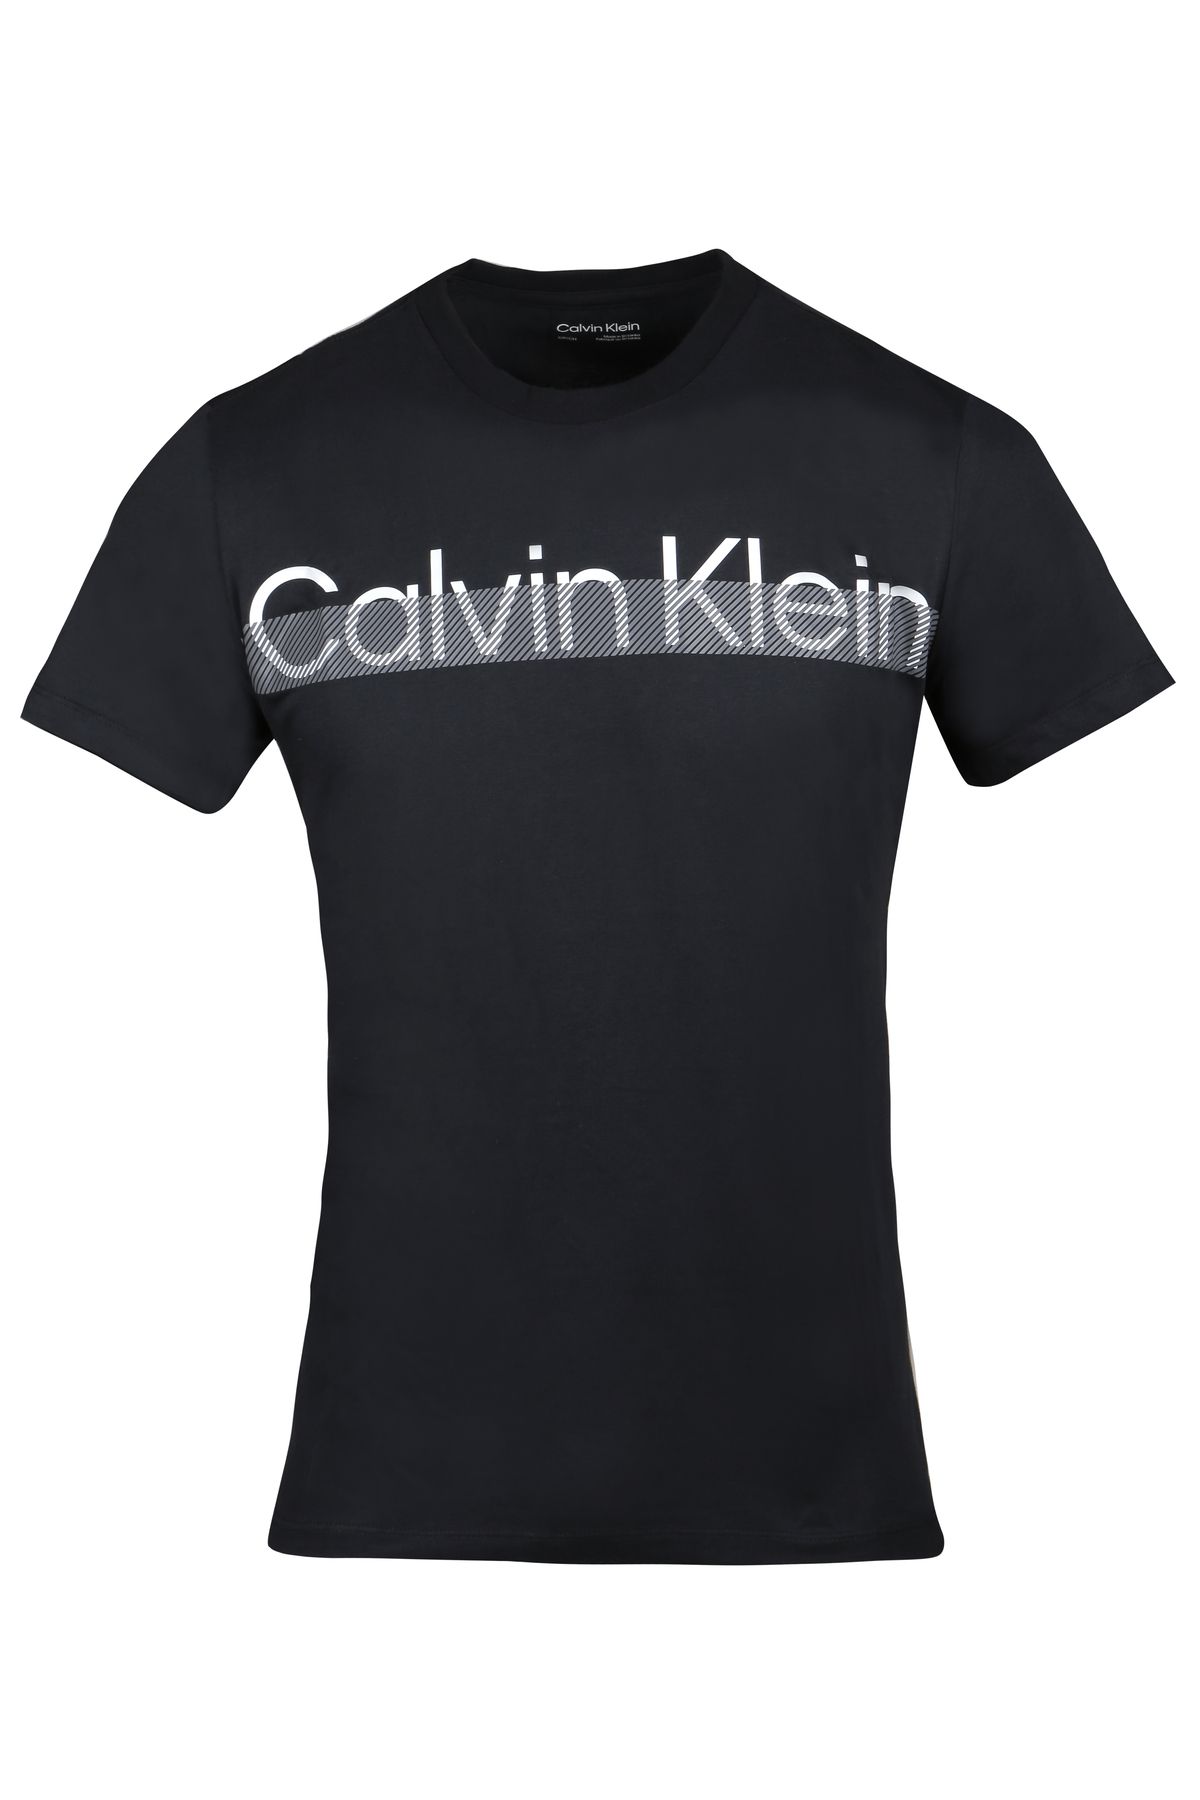 Calvin Klein Erkek T-shırt 40ıc840-001